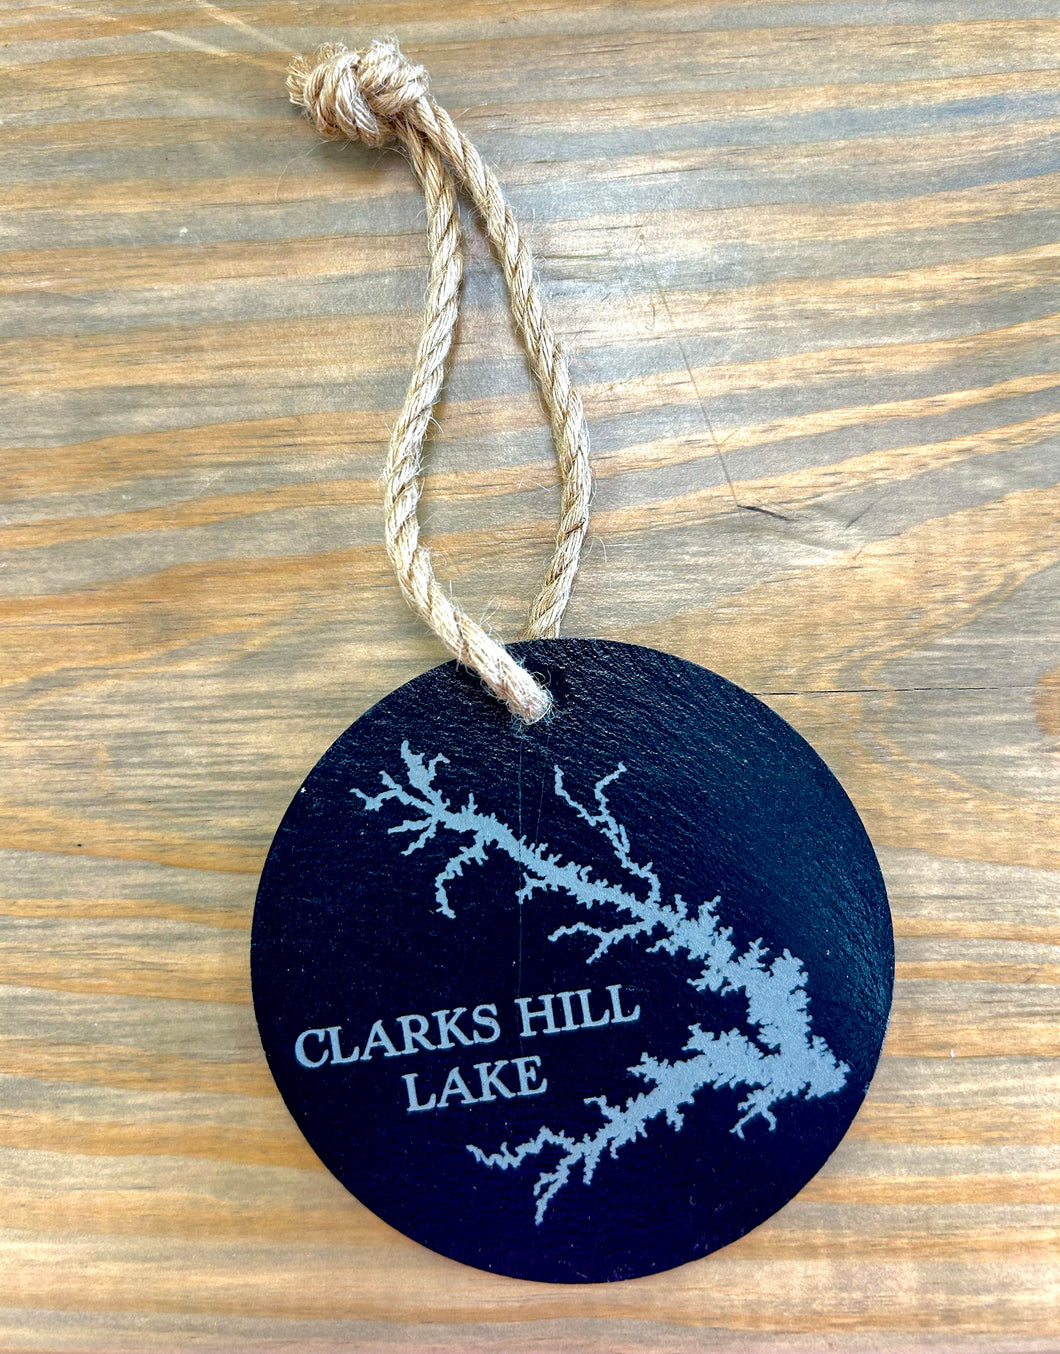 Clarks Hill Lake Christmas Ornament - Lake Gift